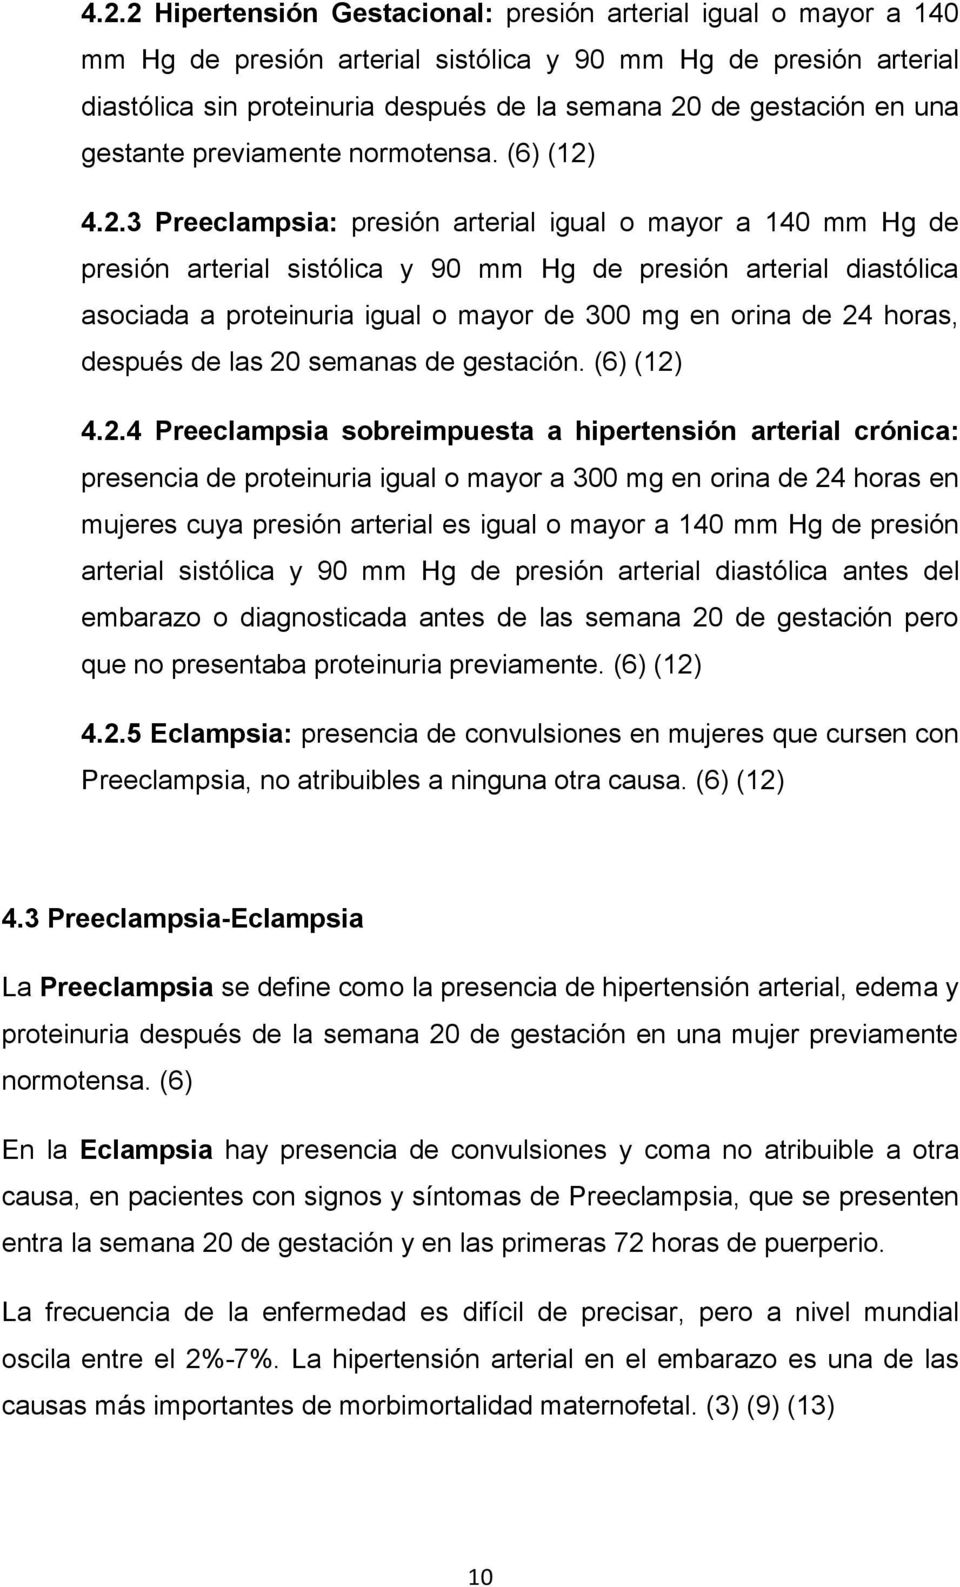 4.2.3 Preeclampsia: presión arterial igual o mayor a 140 mm Hg de presión arterial sistólica y 90 mm Hg de presión arterial diastólica asociada a proteinuria igual o mayor de 300 mg en orina de 24